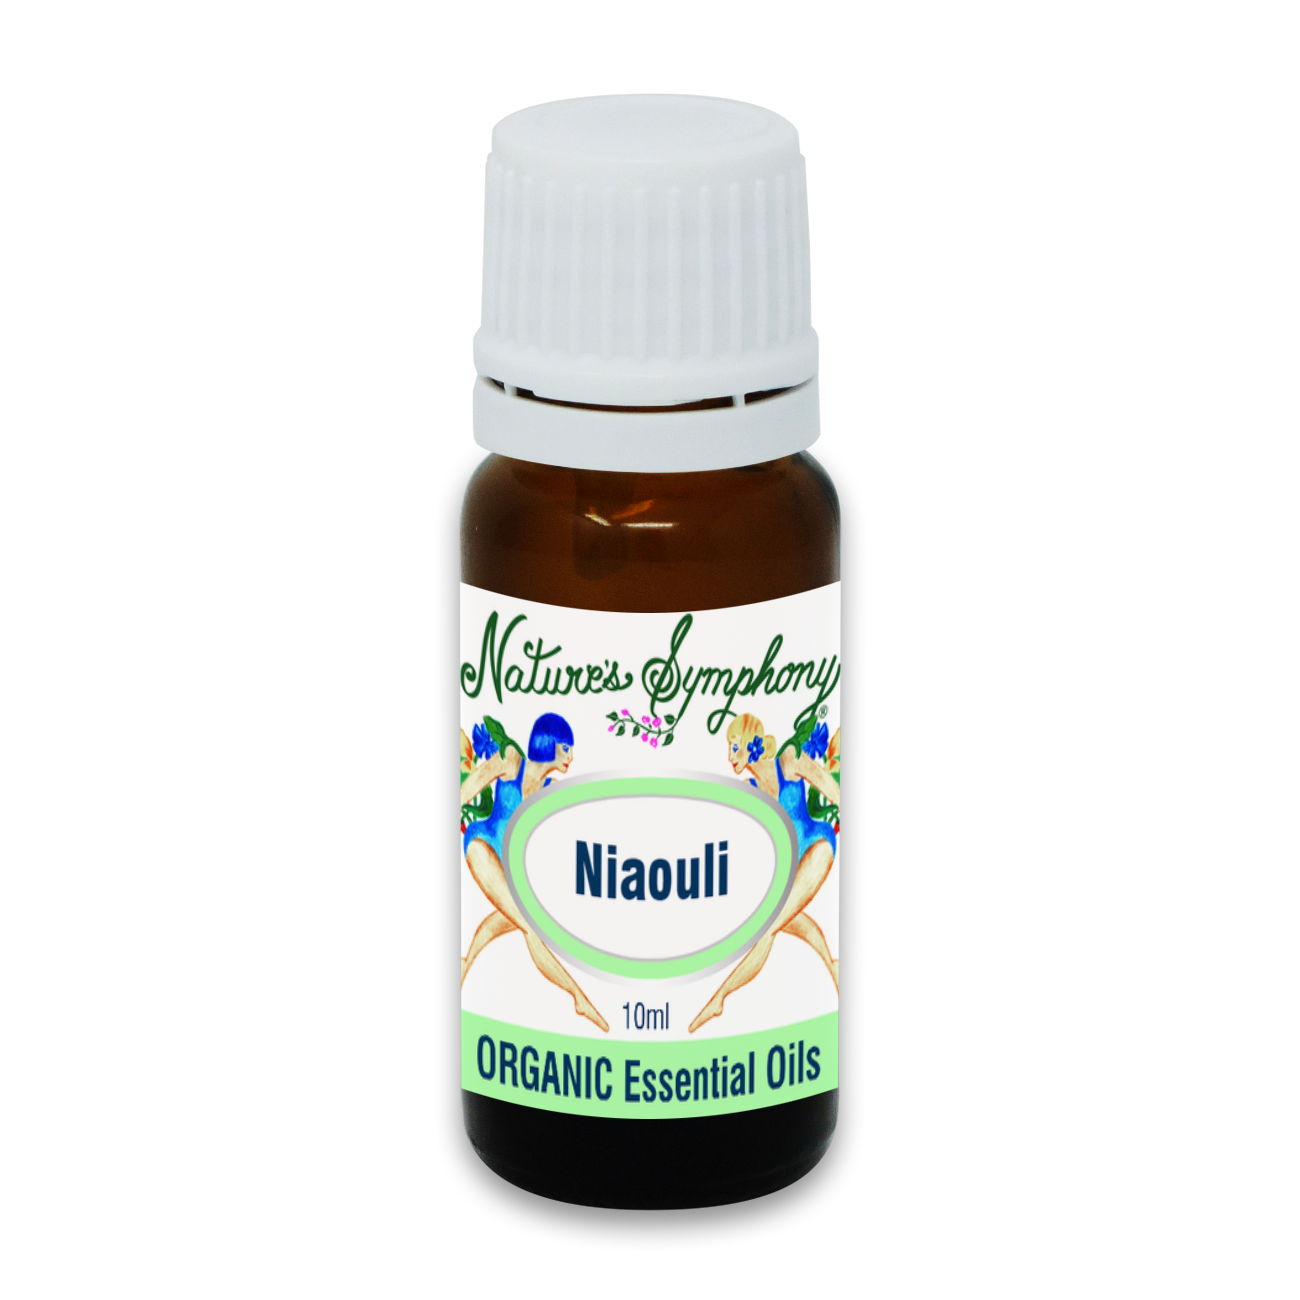 Niaouli, Organic/Wildcrafted oil - 10ml